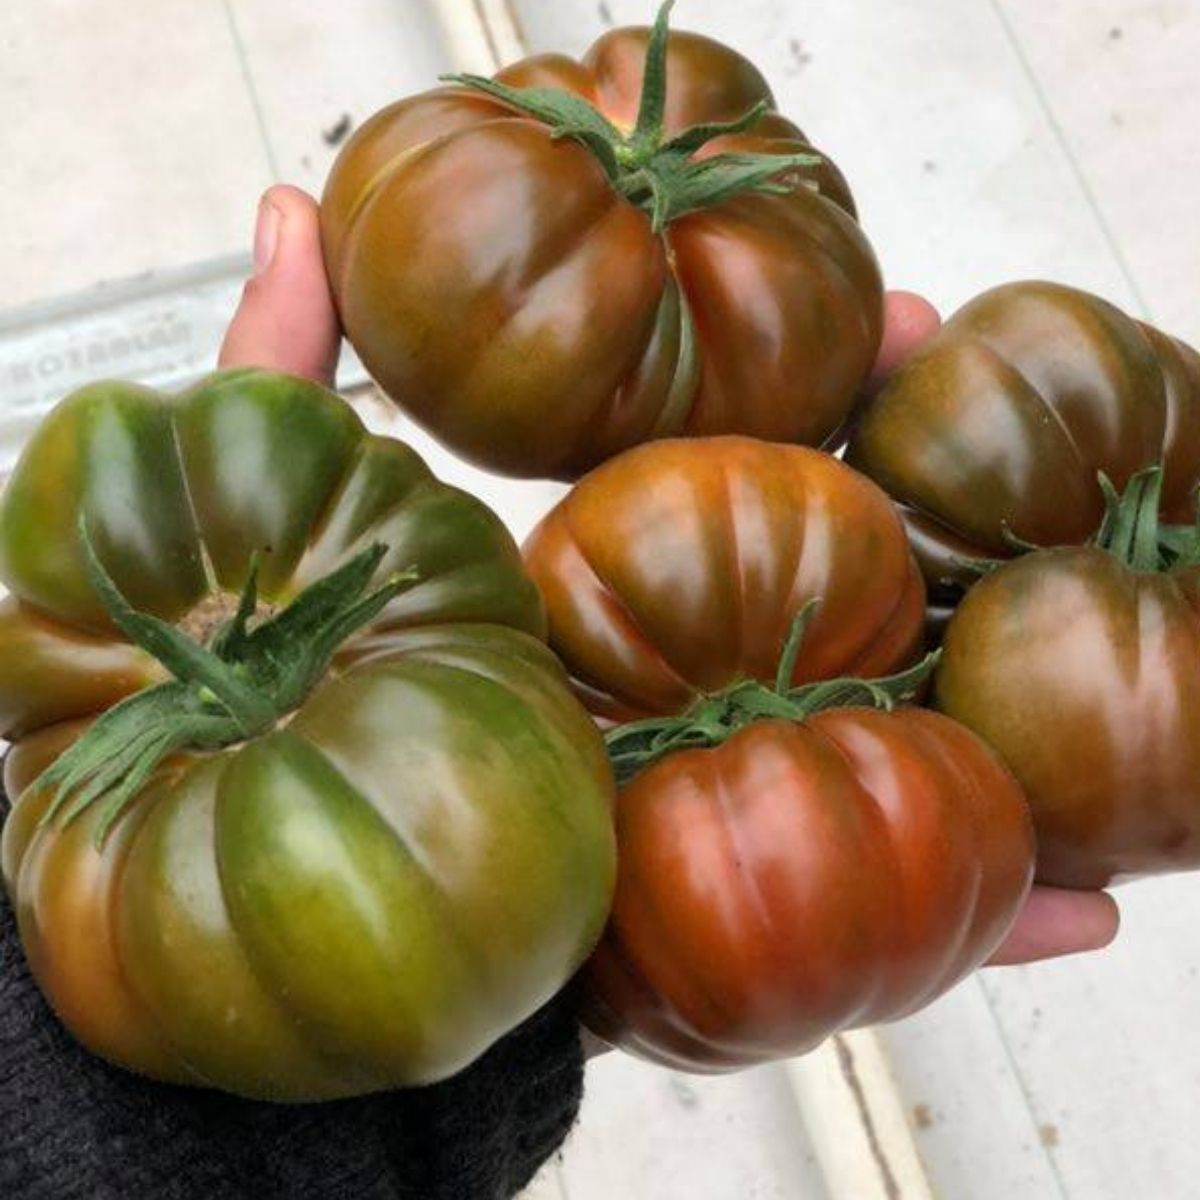 Tomate - Seminte de tomate BOCAMEGRA F1, 100 seminte, YUKSEL, hectarul.ro